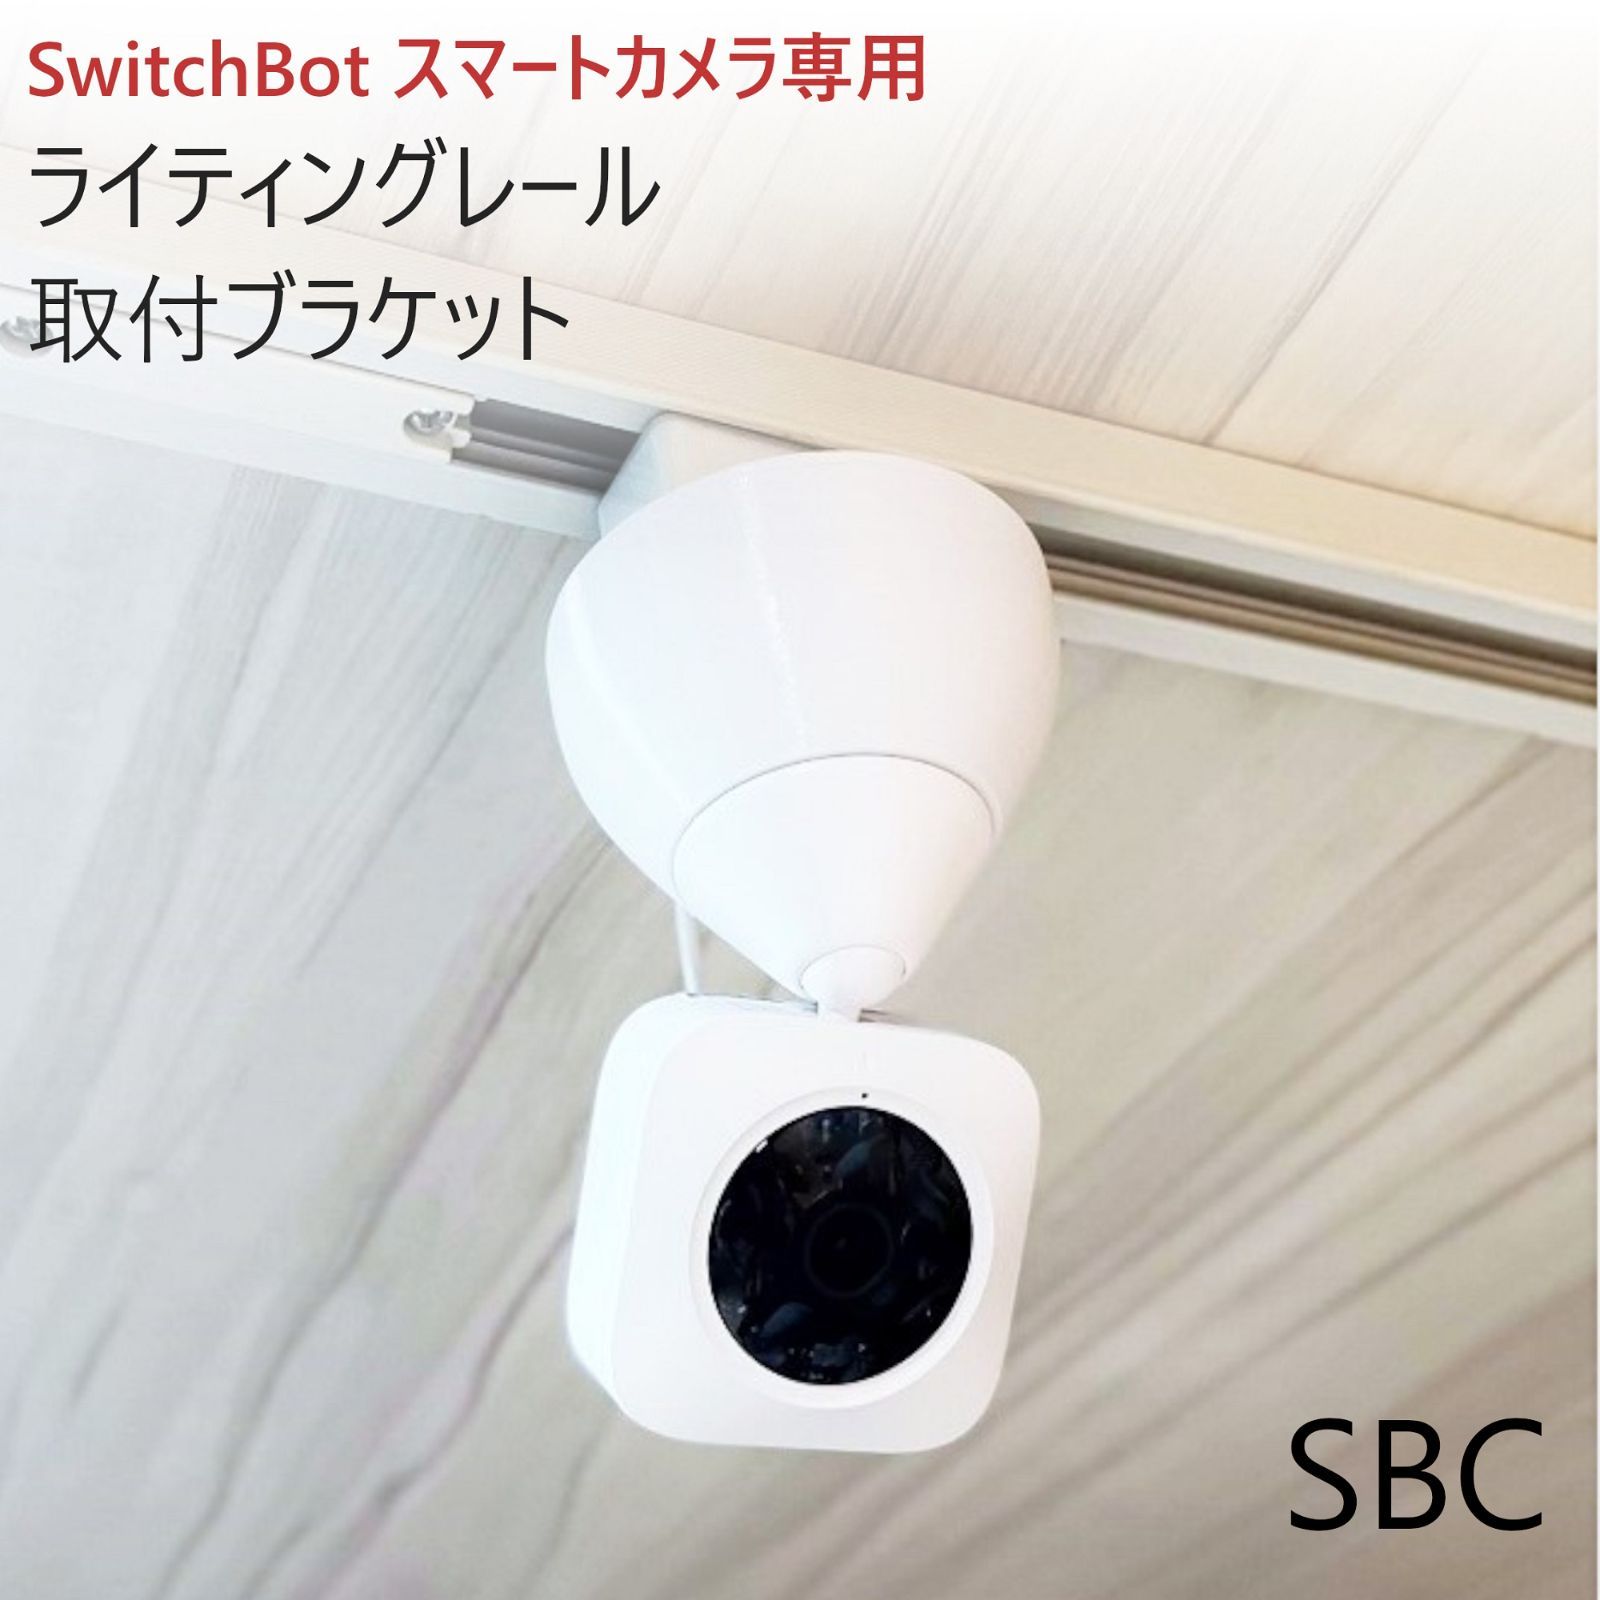 SwitchBot 見守りカメラ専用 ライティングレール取付アダプタ[SBM 